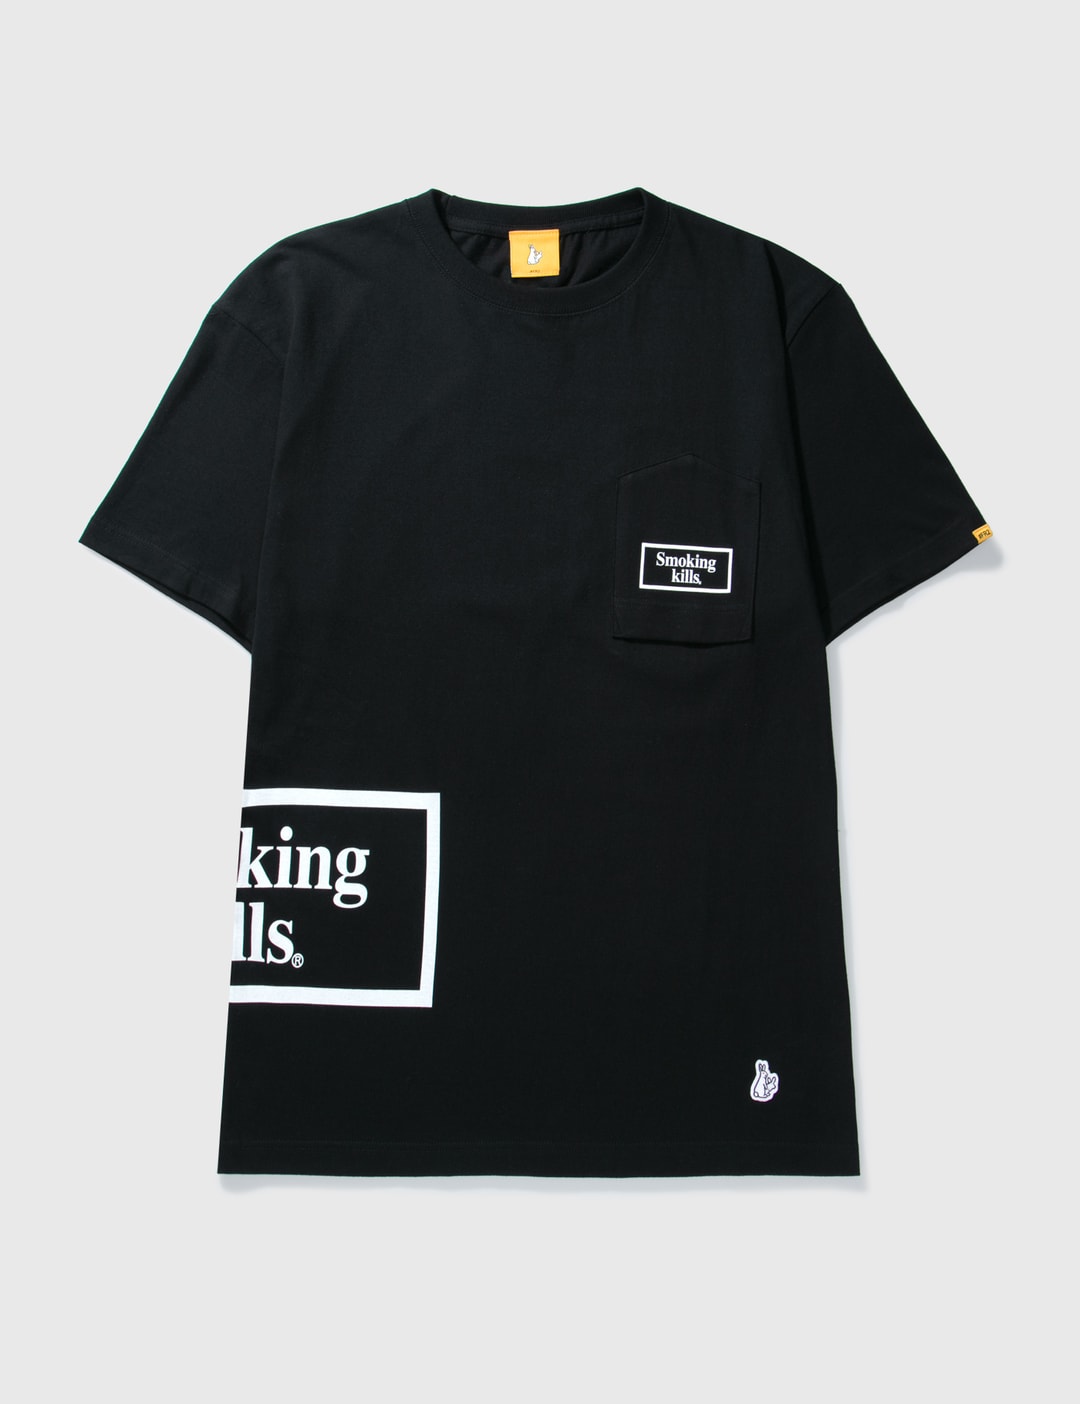 #FR2 - Smoking Kills Reversed Pocket T-shirt | HBX - Globally Curated ...